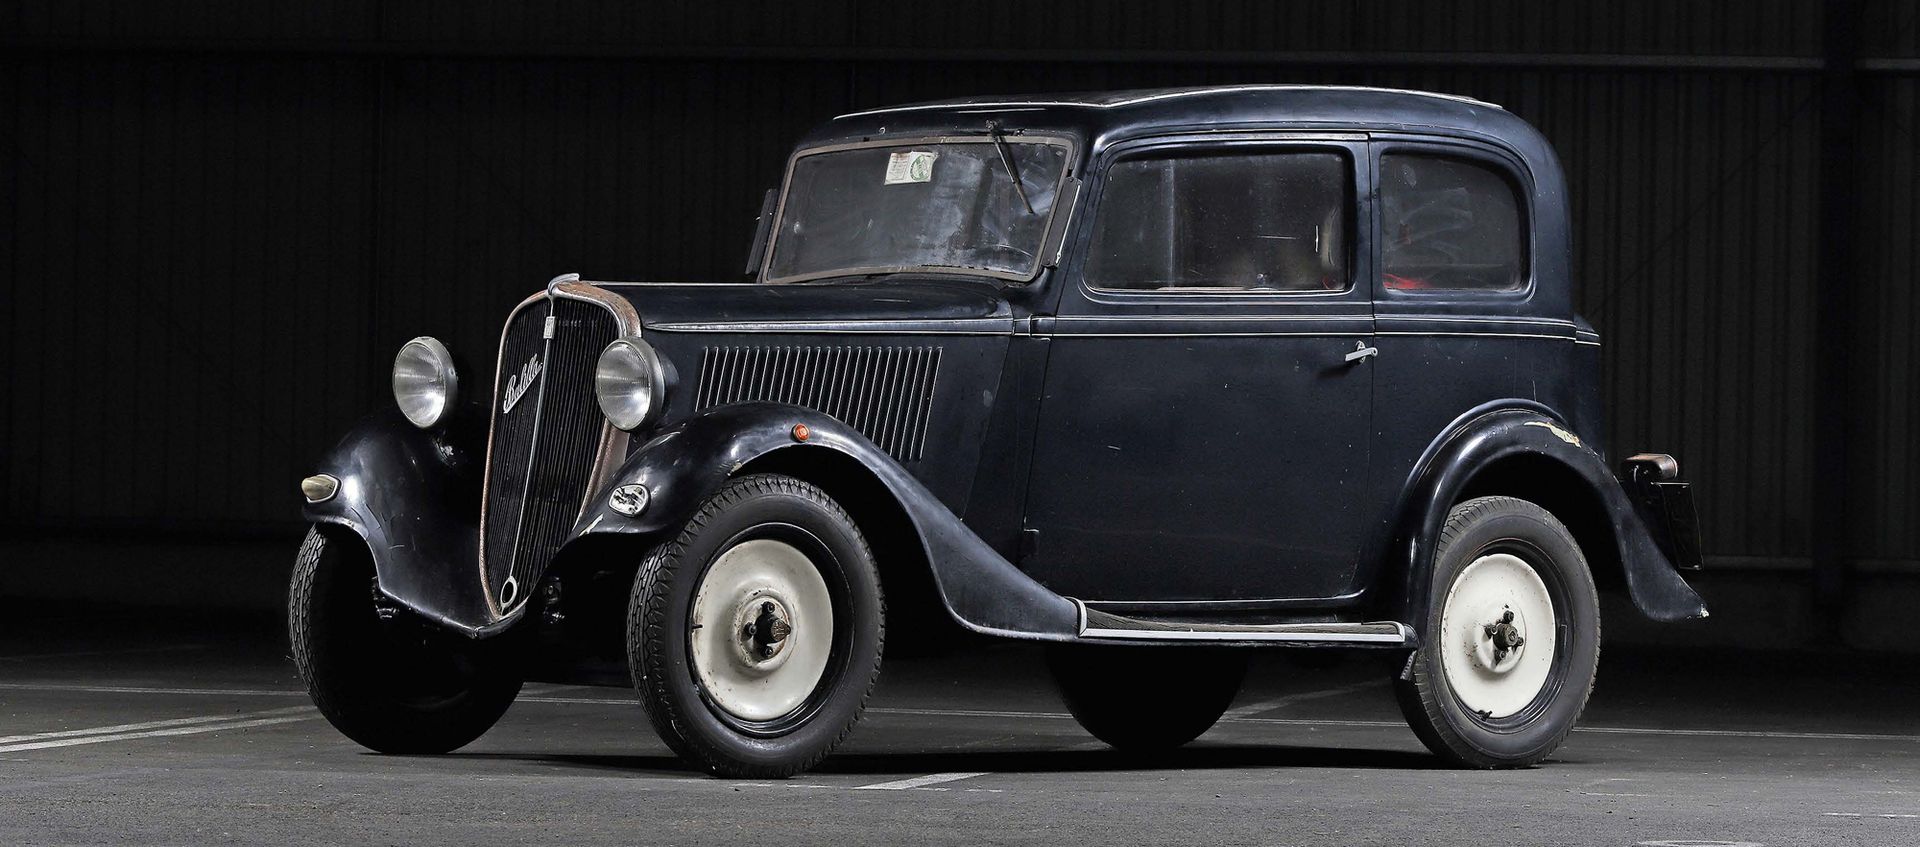 1933 FIAT 508 Balilla 
Sin reservas



Icono popular italiano

Interesante proye&hellip;